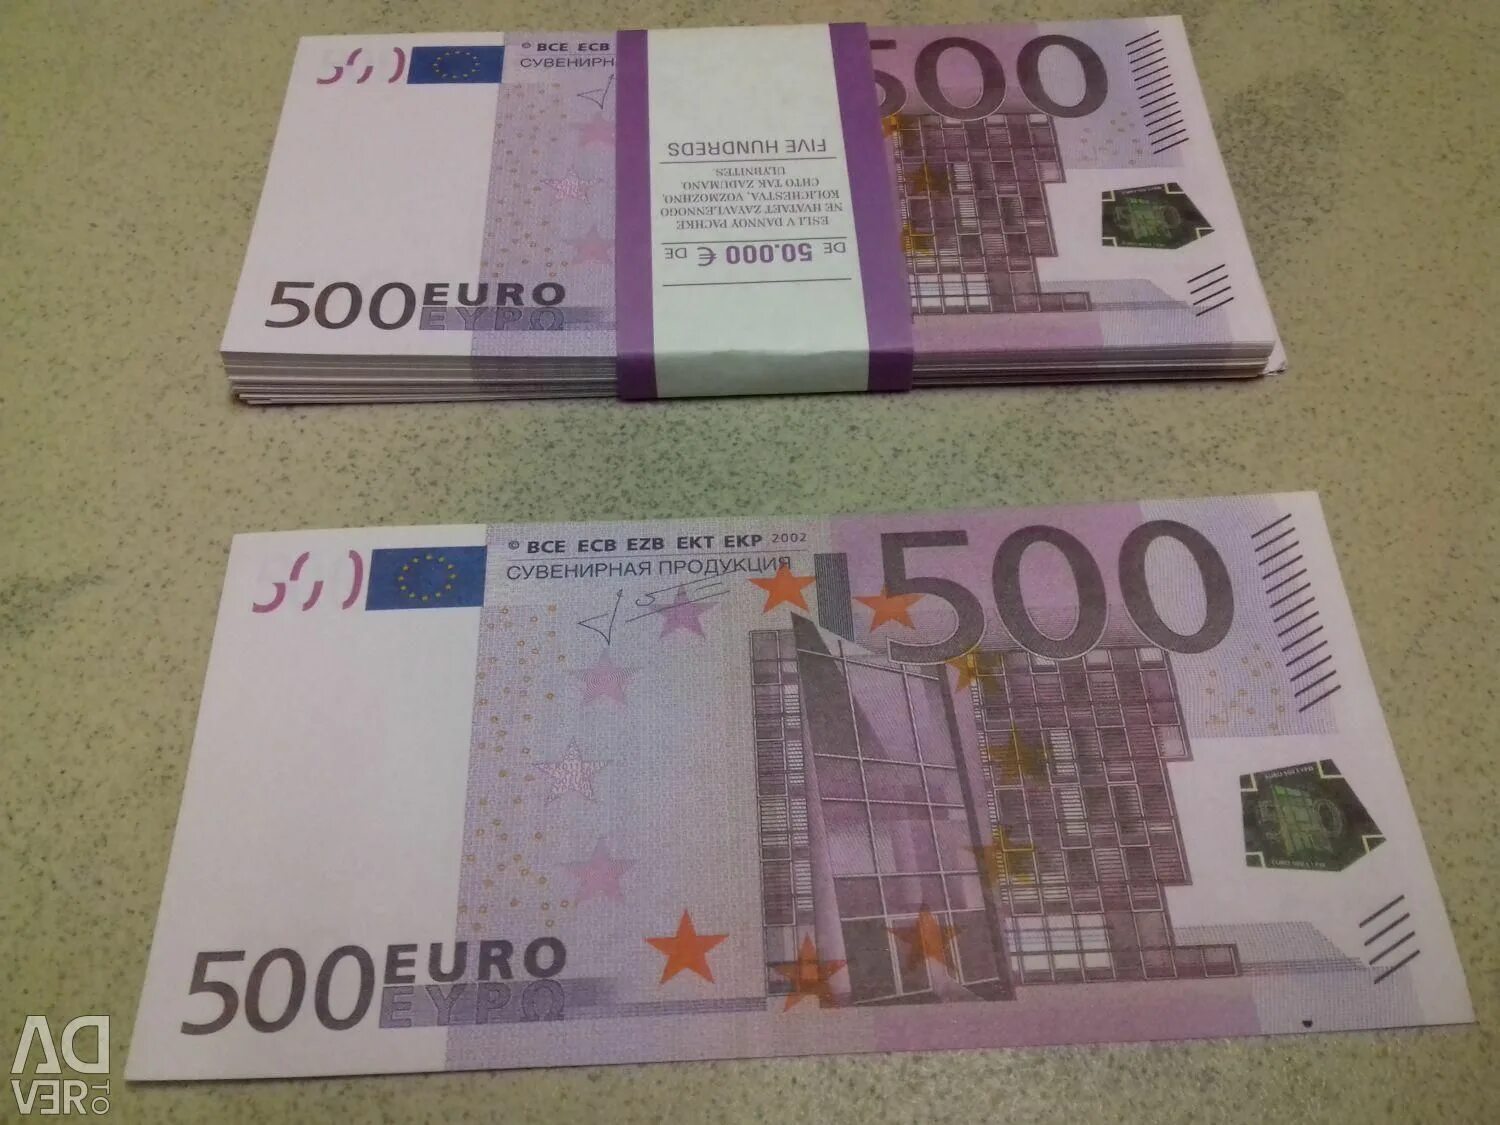 Пачка купюр 500 евро. 500 Евро банка приколов. 500 Евро в рублях. 500 Евро купюра сувенирная продукция.